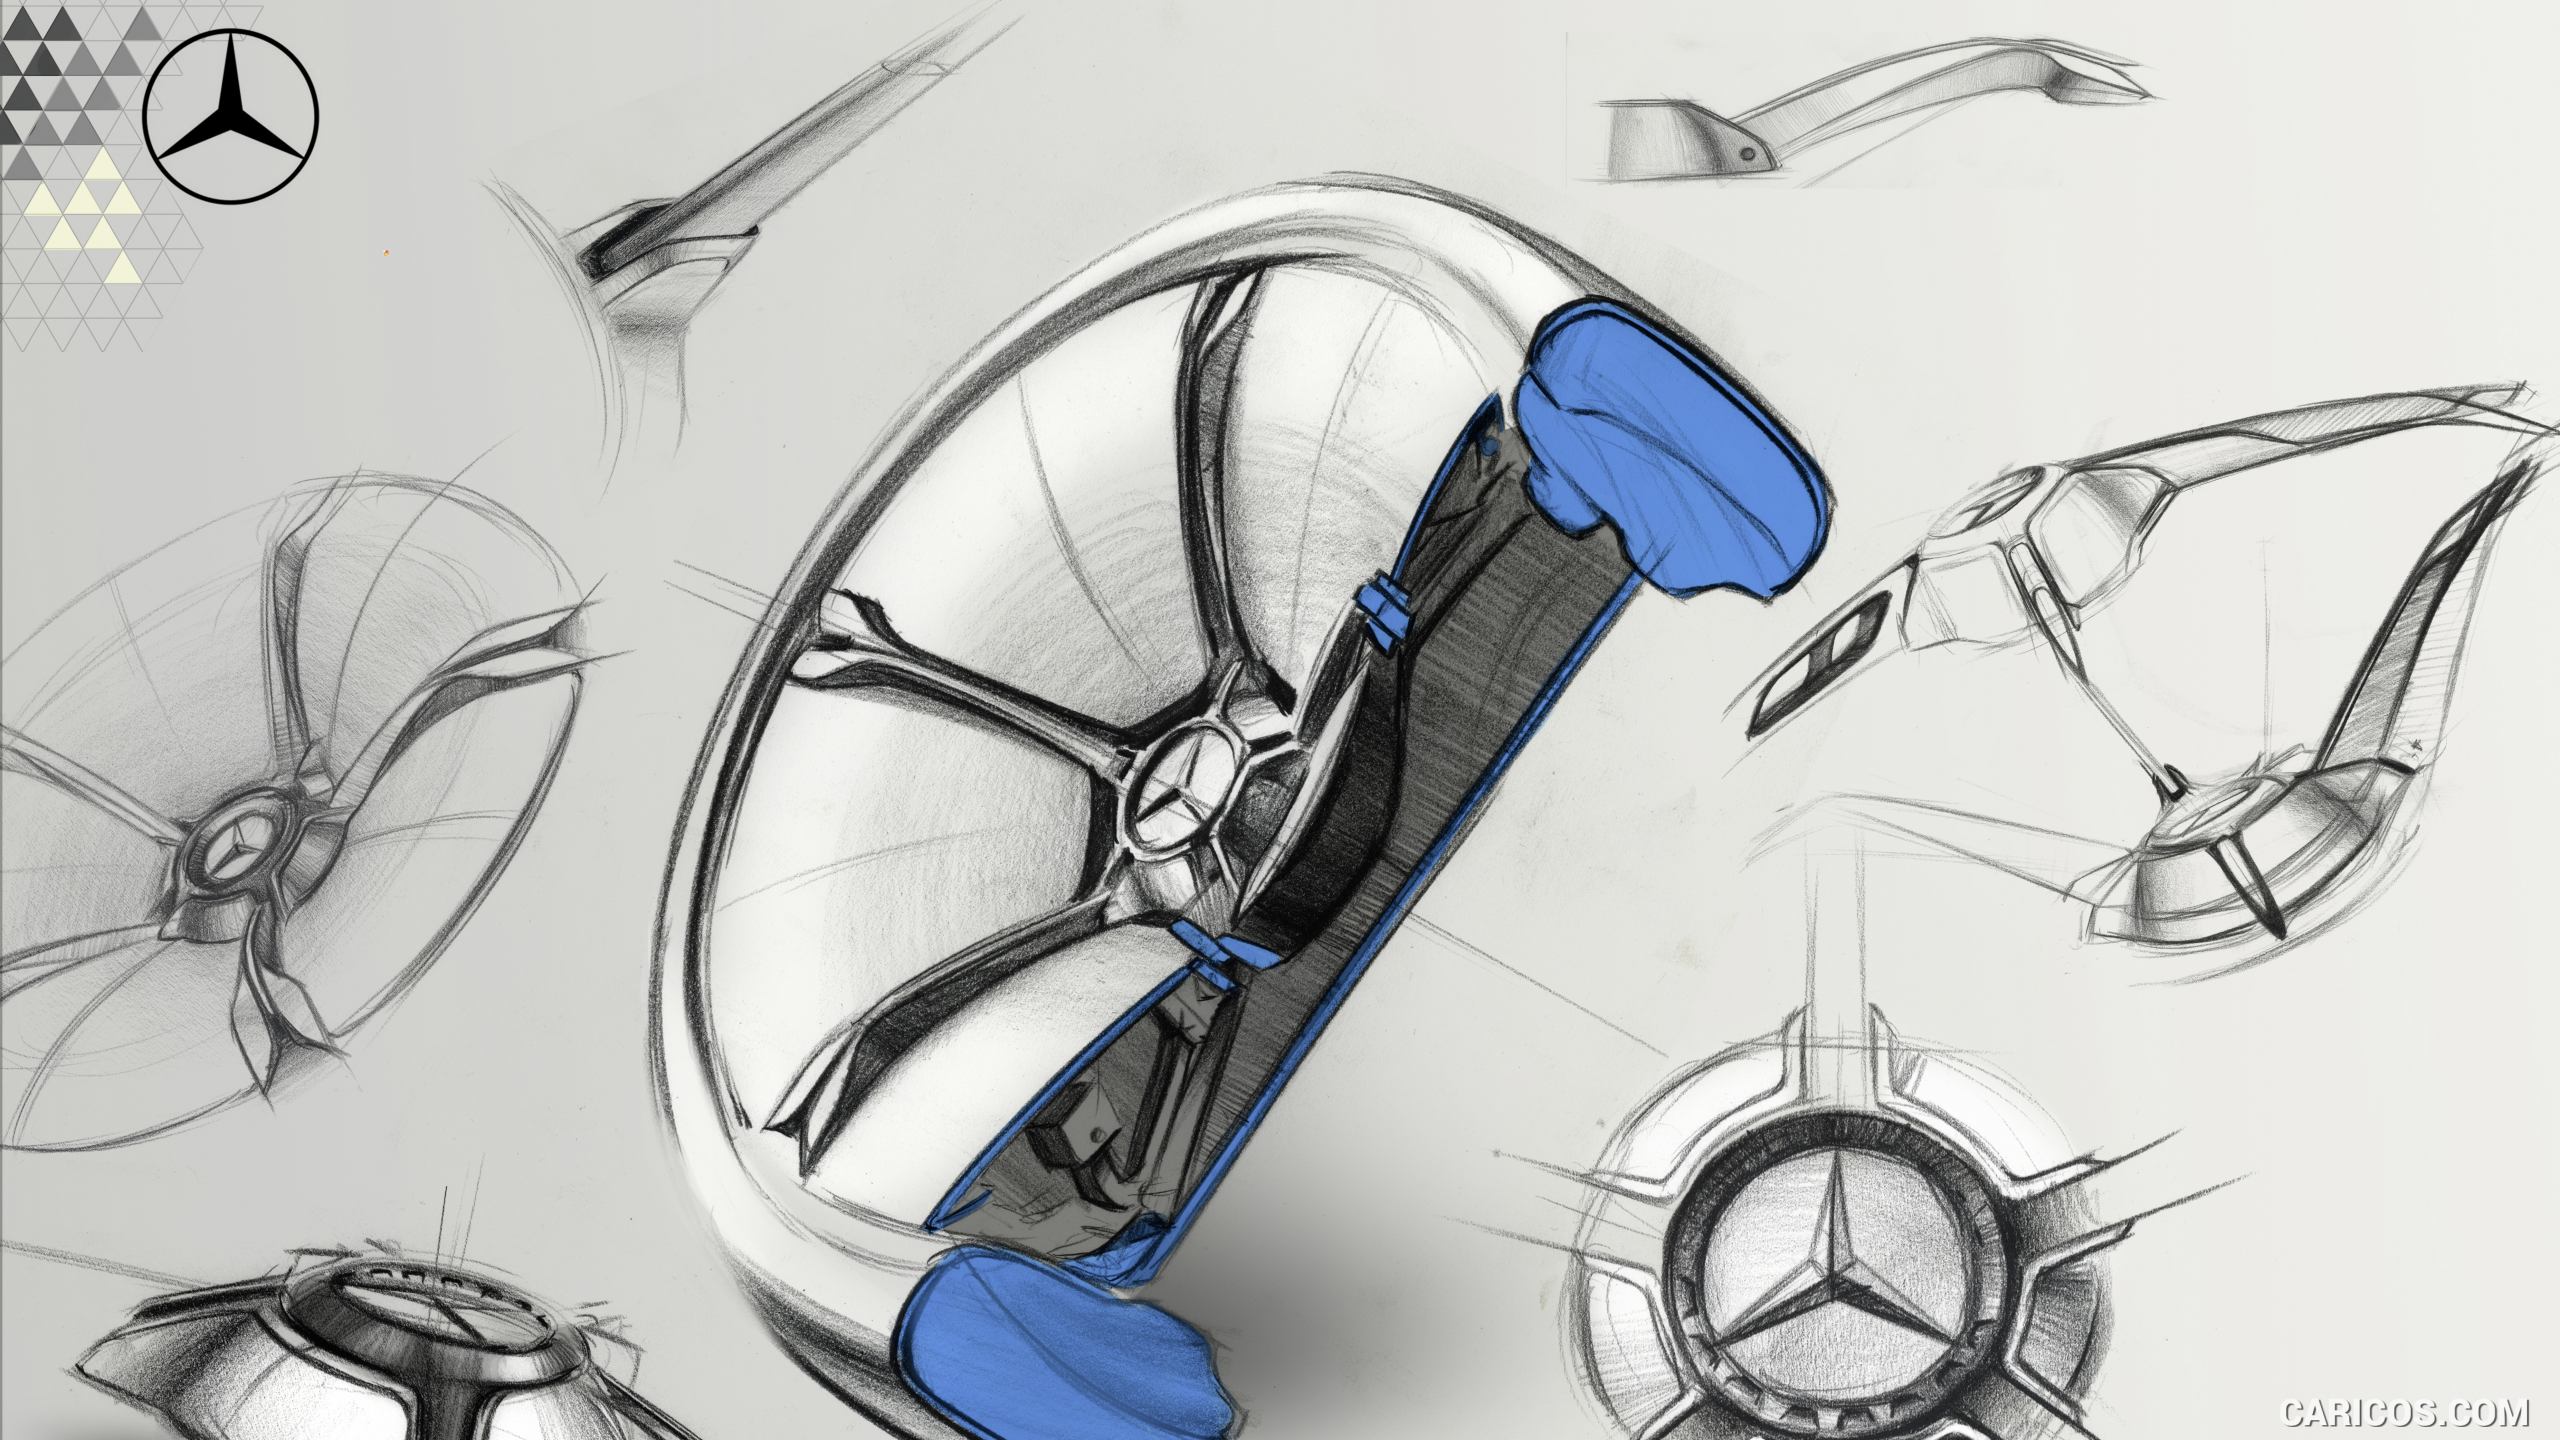 2015 Mercedes-Benz Concept IAA (Intelligent Aerodynamic Automobile) - Design Sketch, #45 of 49